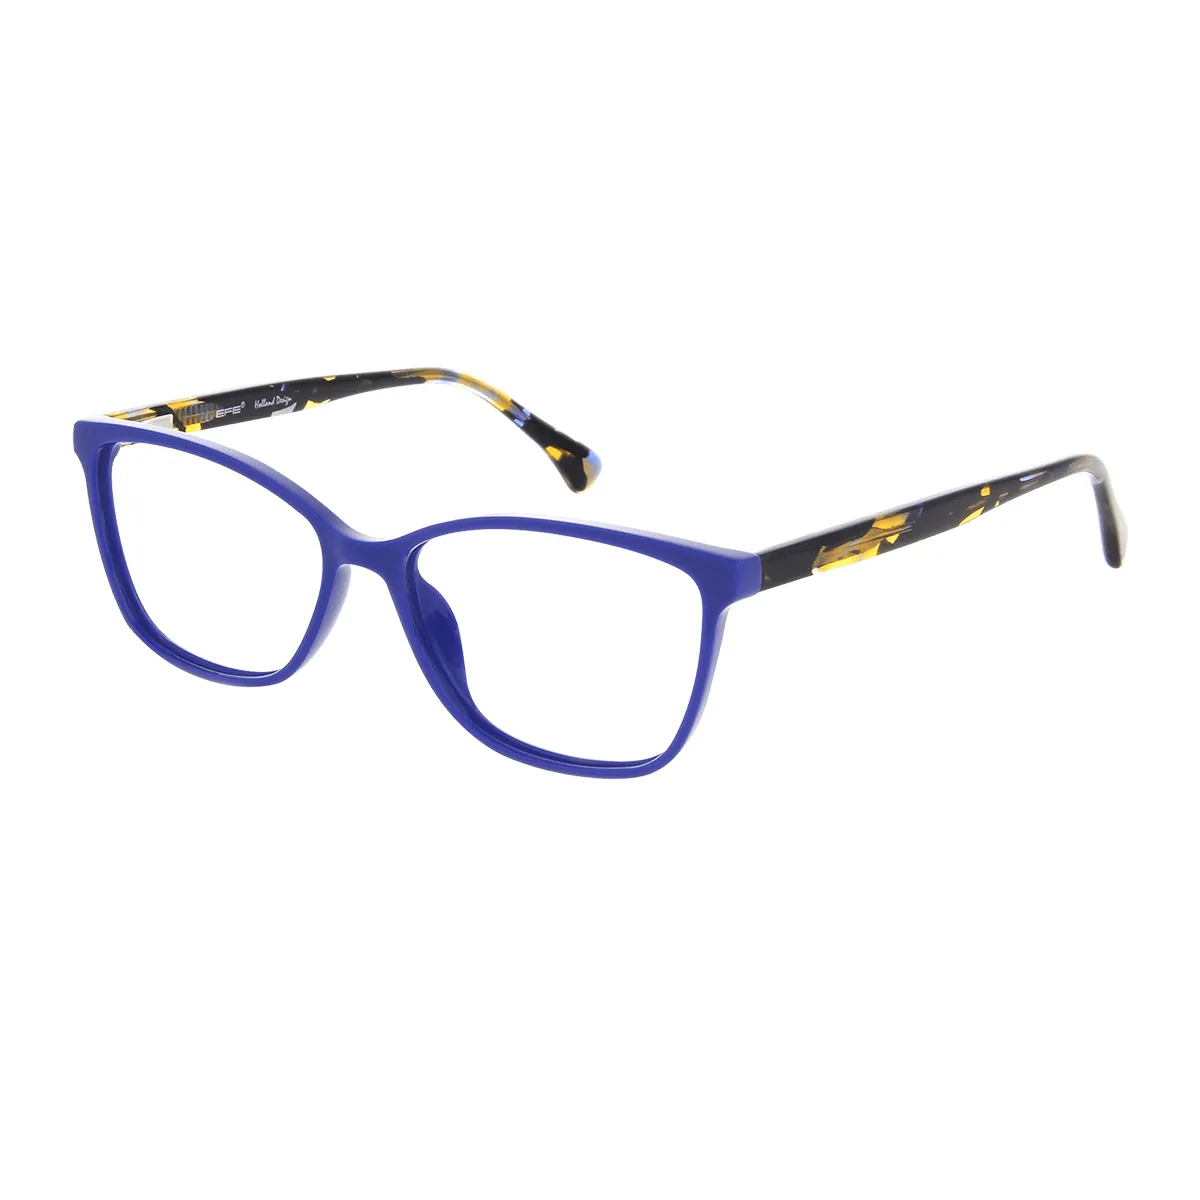 Ayliffe - Square Blue Glasses for Women